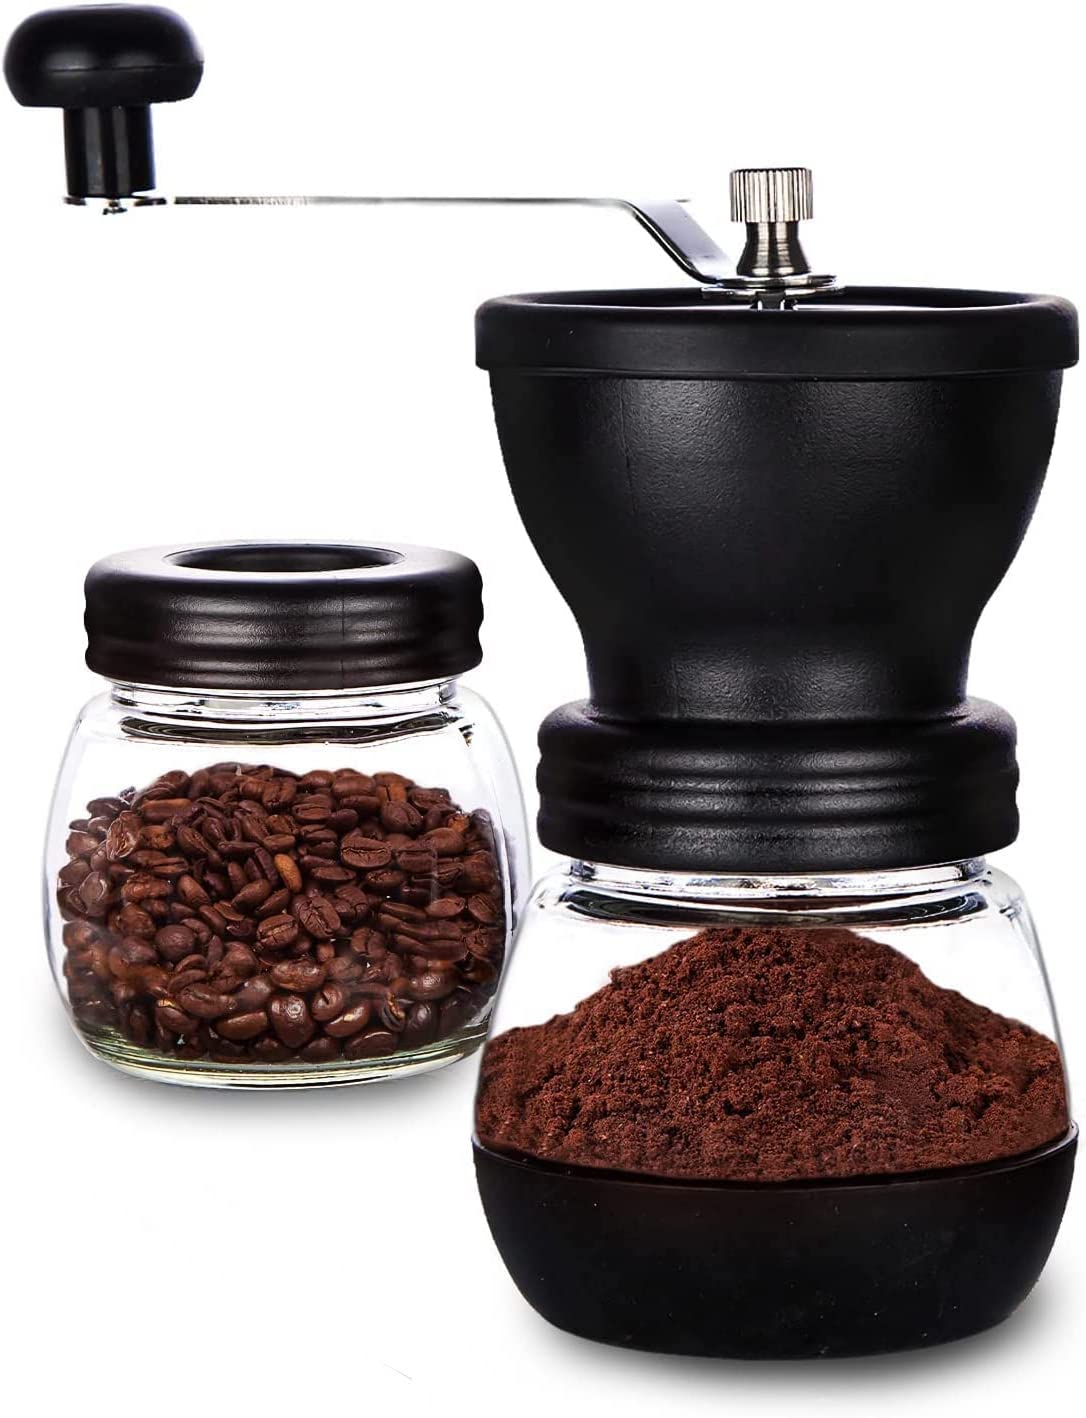 Coffee grinder manual adjustable ceramic blades